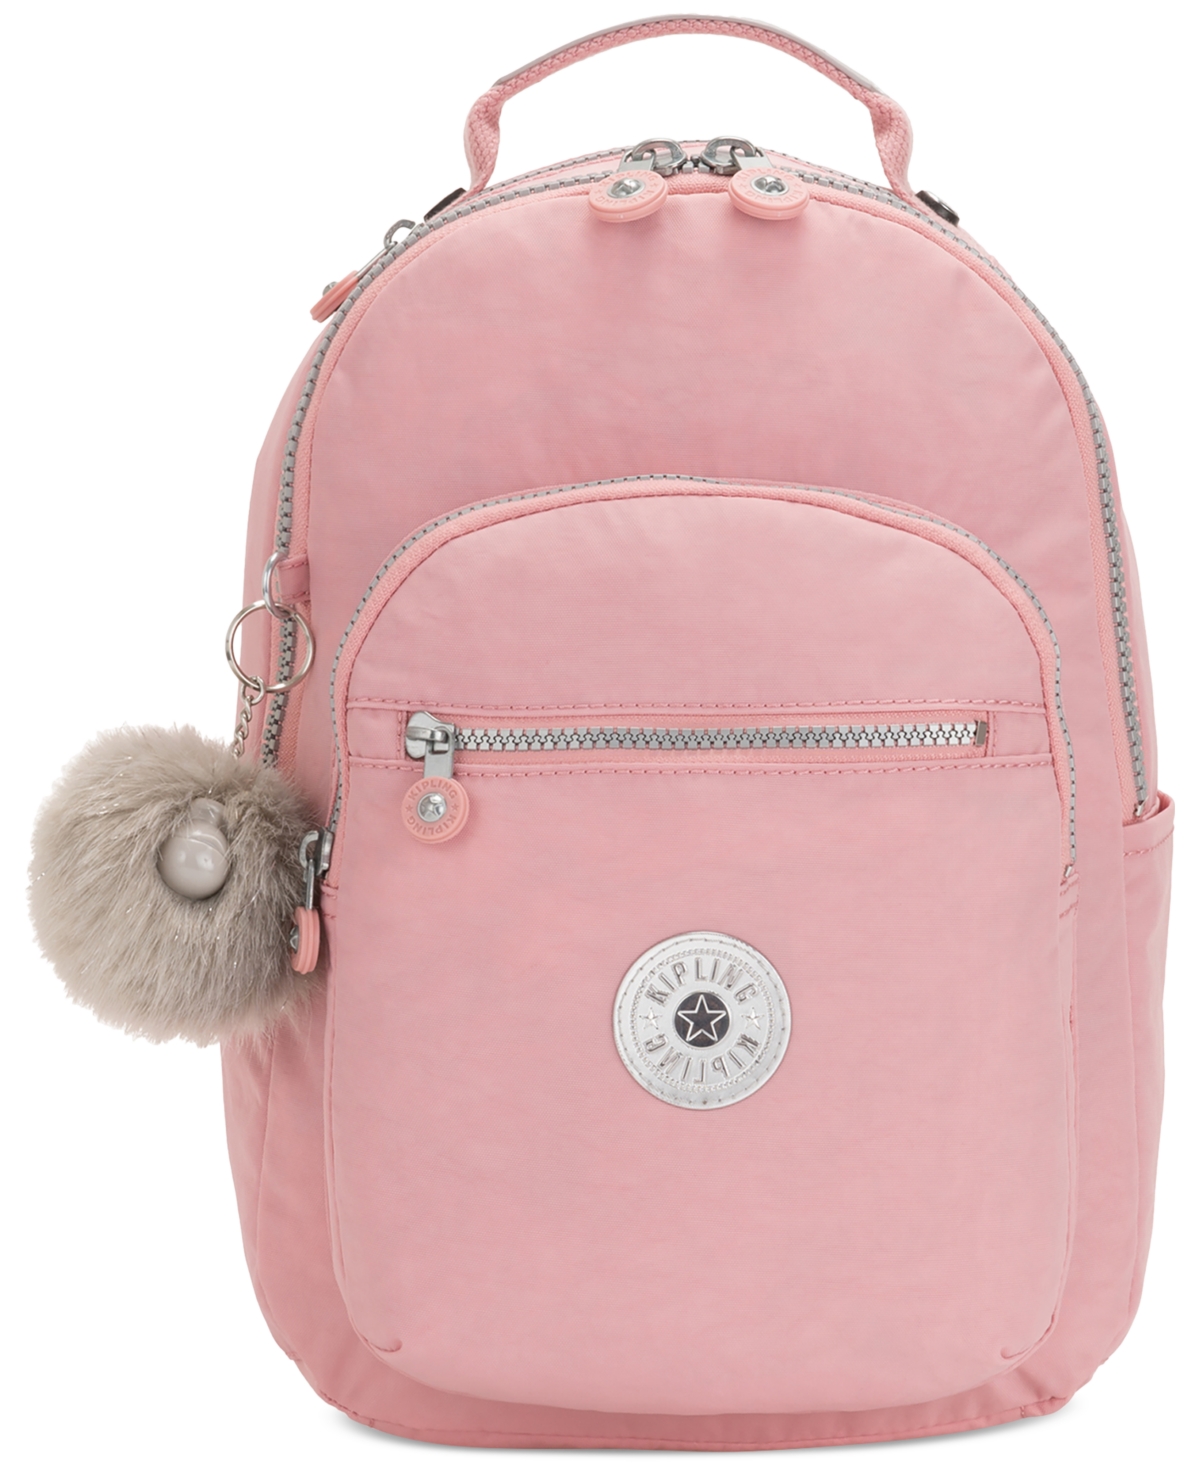 Kipling City Pack Mini Backpack In Bridal Rose